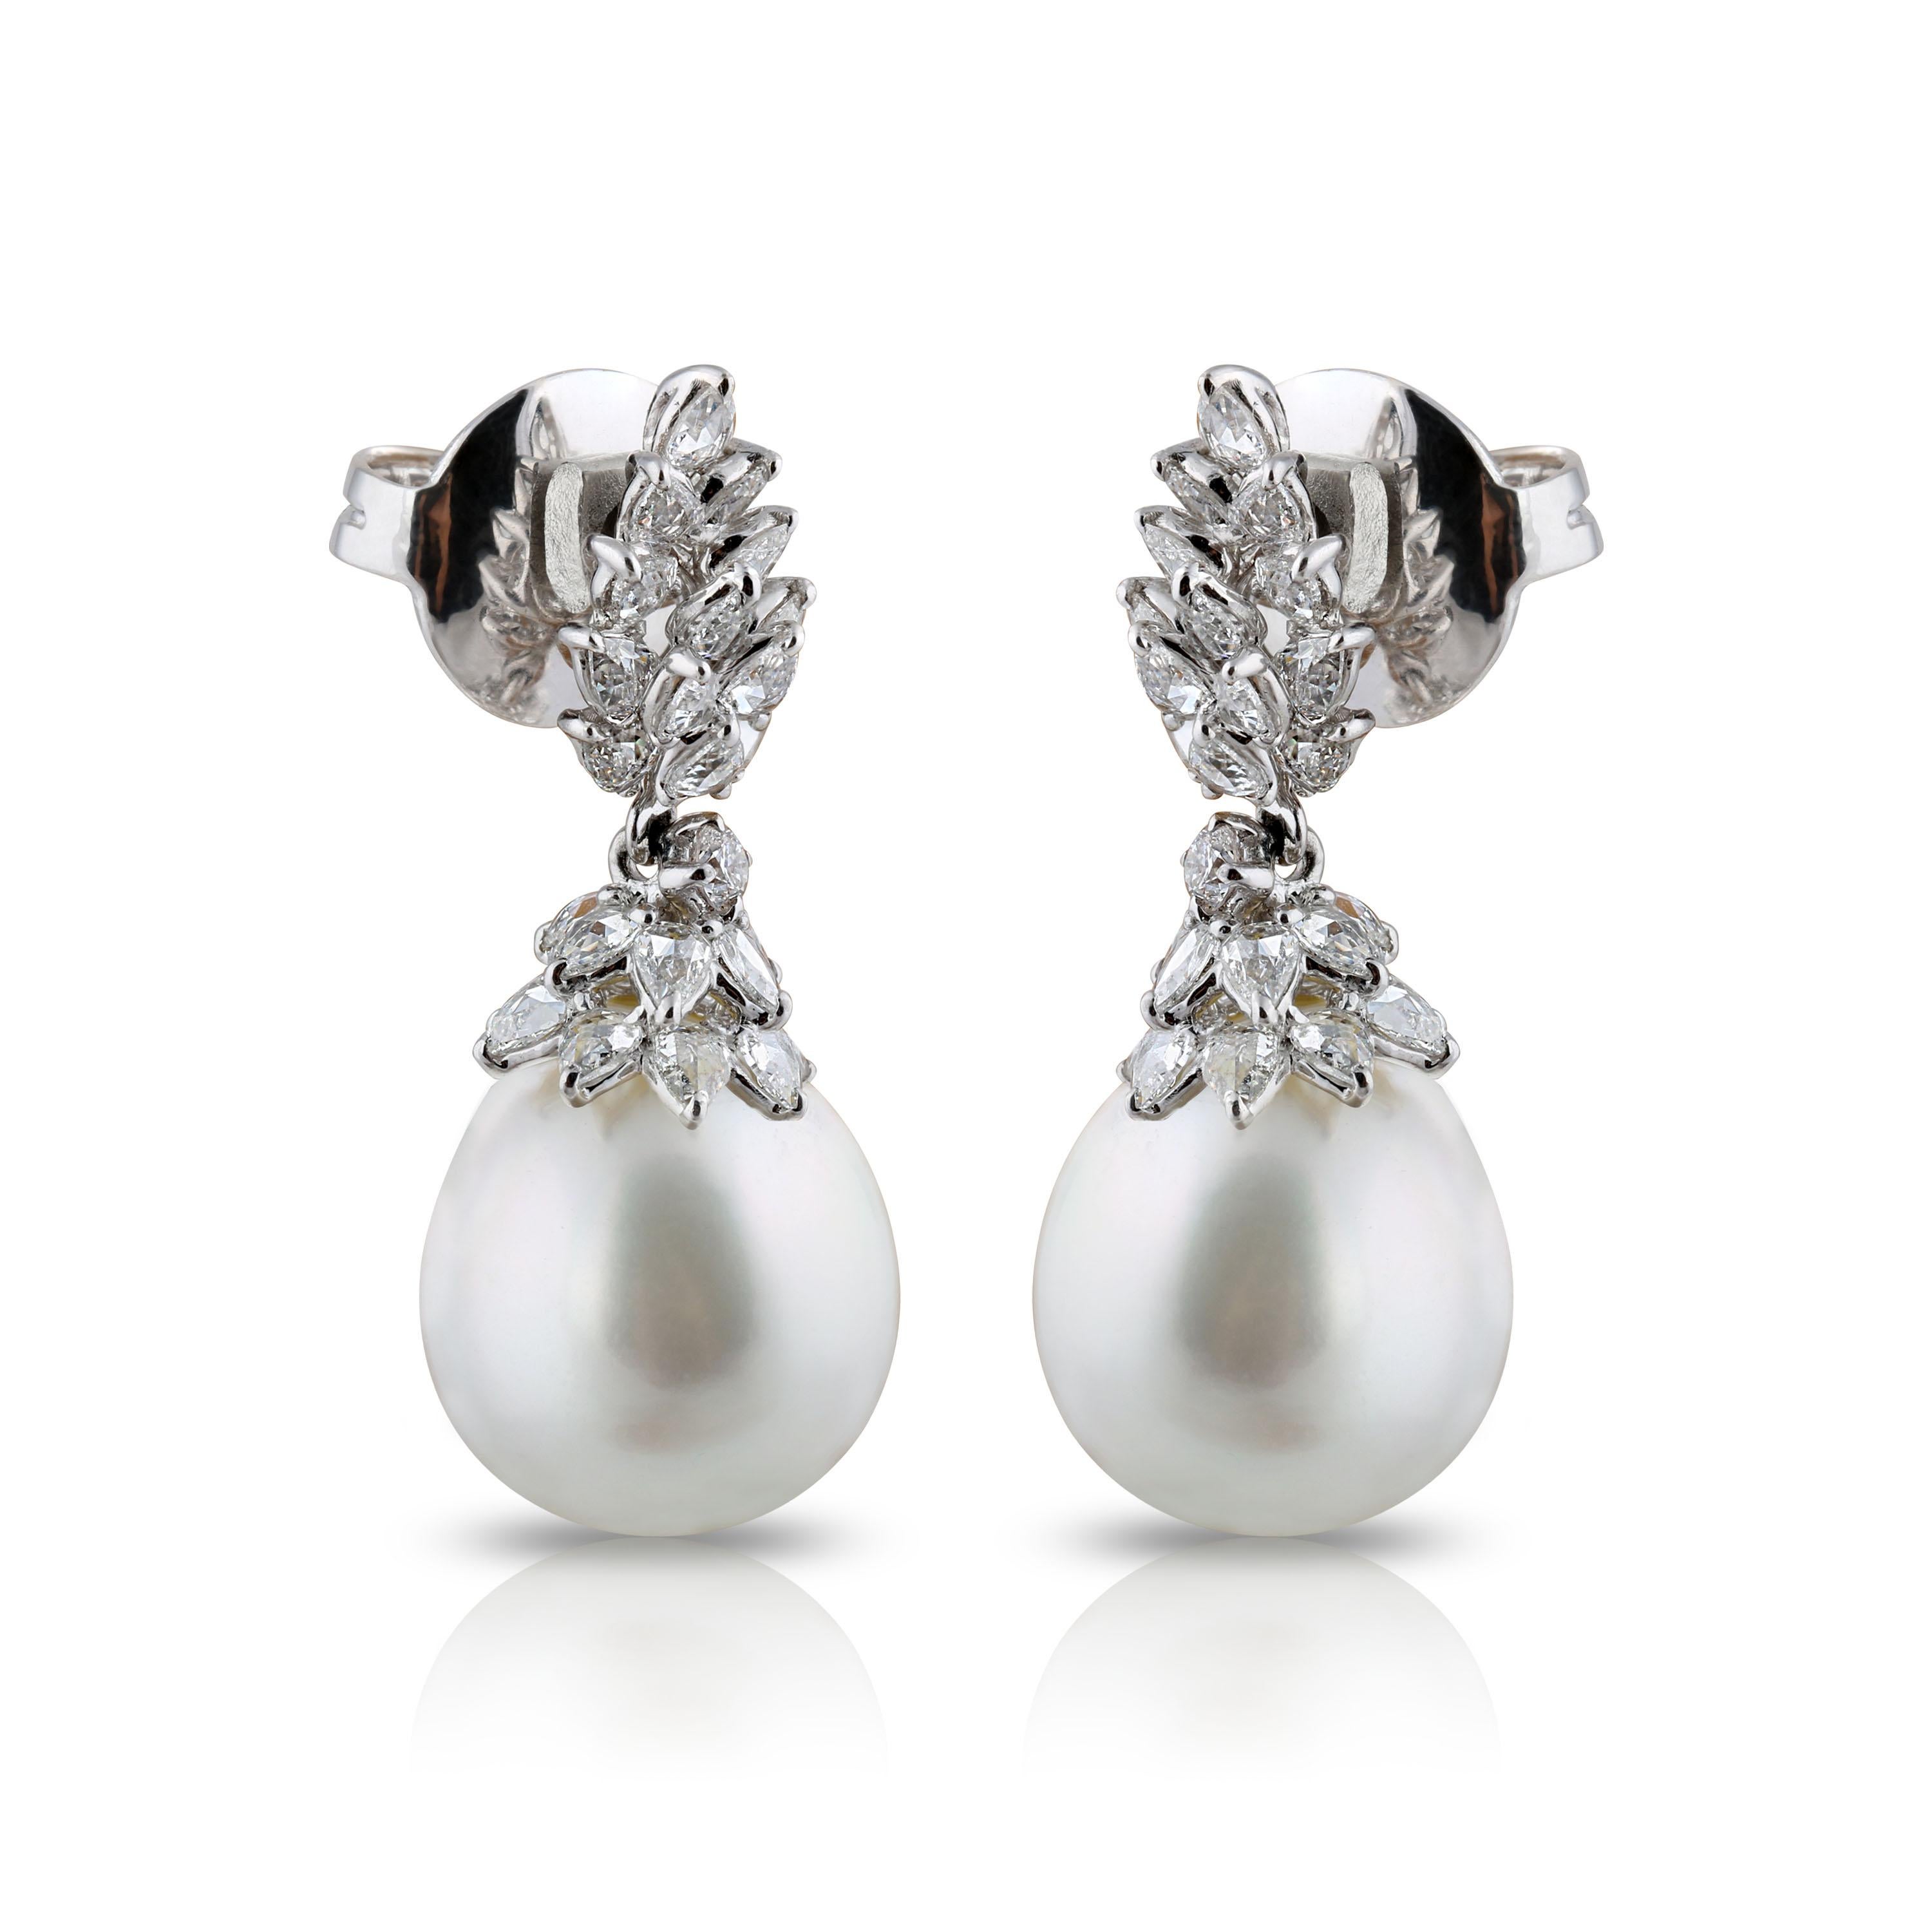 Modern Studio Rêves Rose Cut Diamonds and South Sea Pearls Earrings in 18 Karat Gold